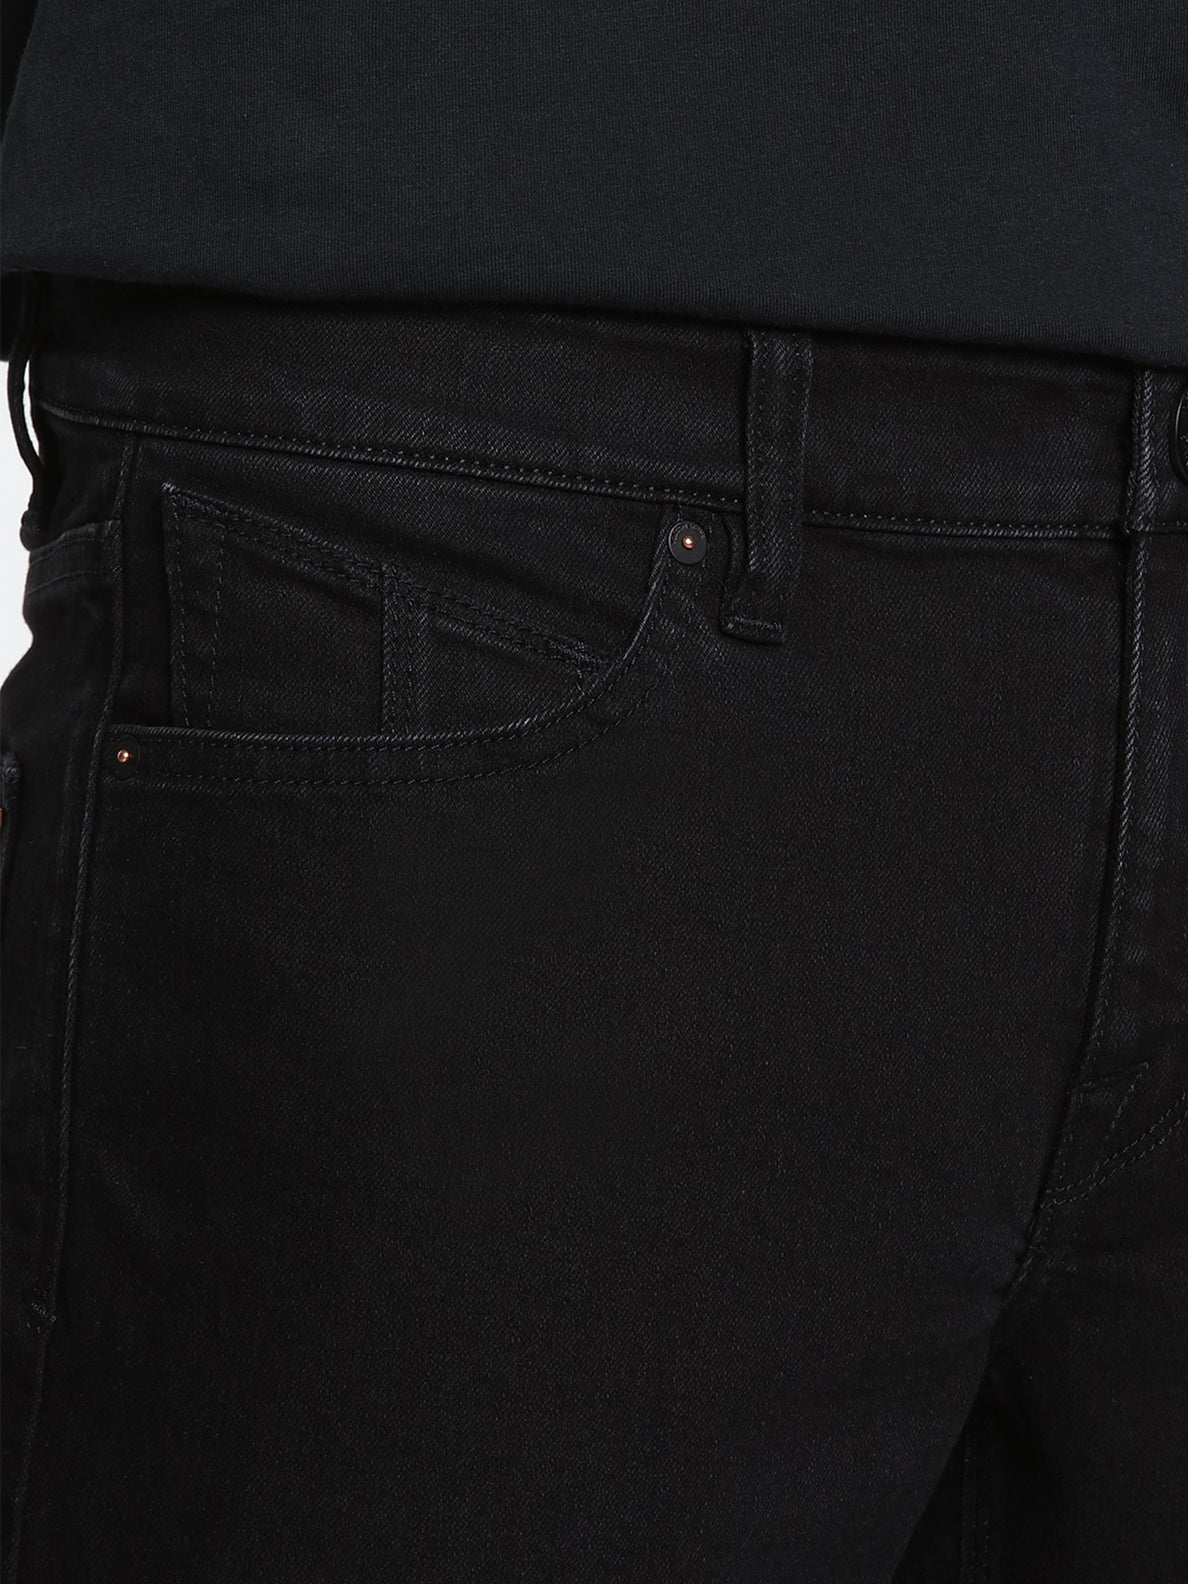 2x4 Skinny Fit Jeans - Men's Black Stretch Skinny Jeans | Volcom ...